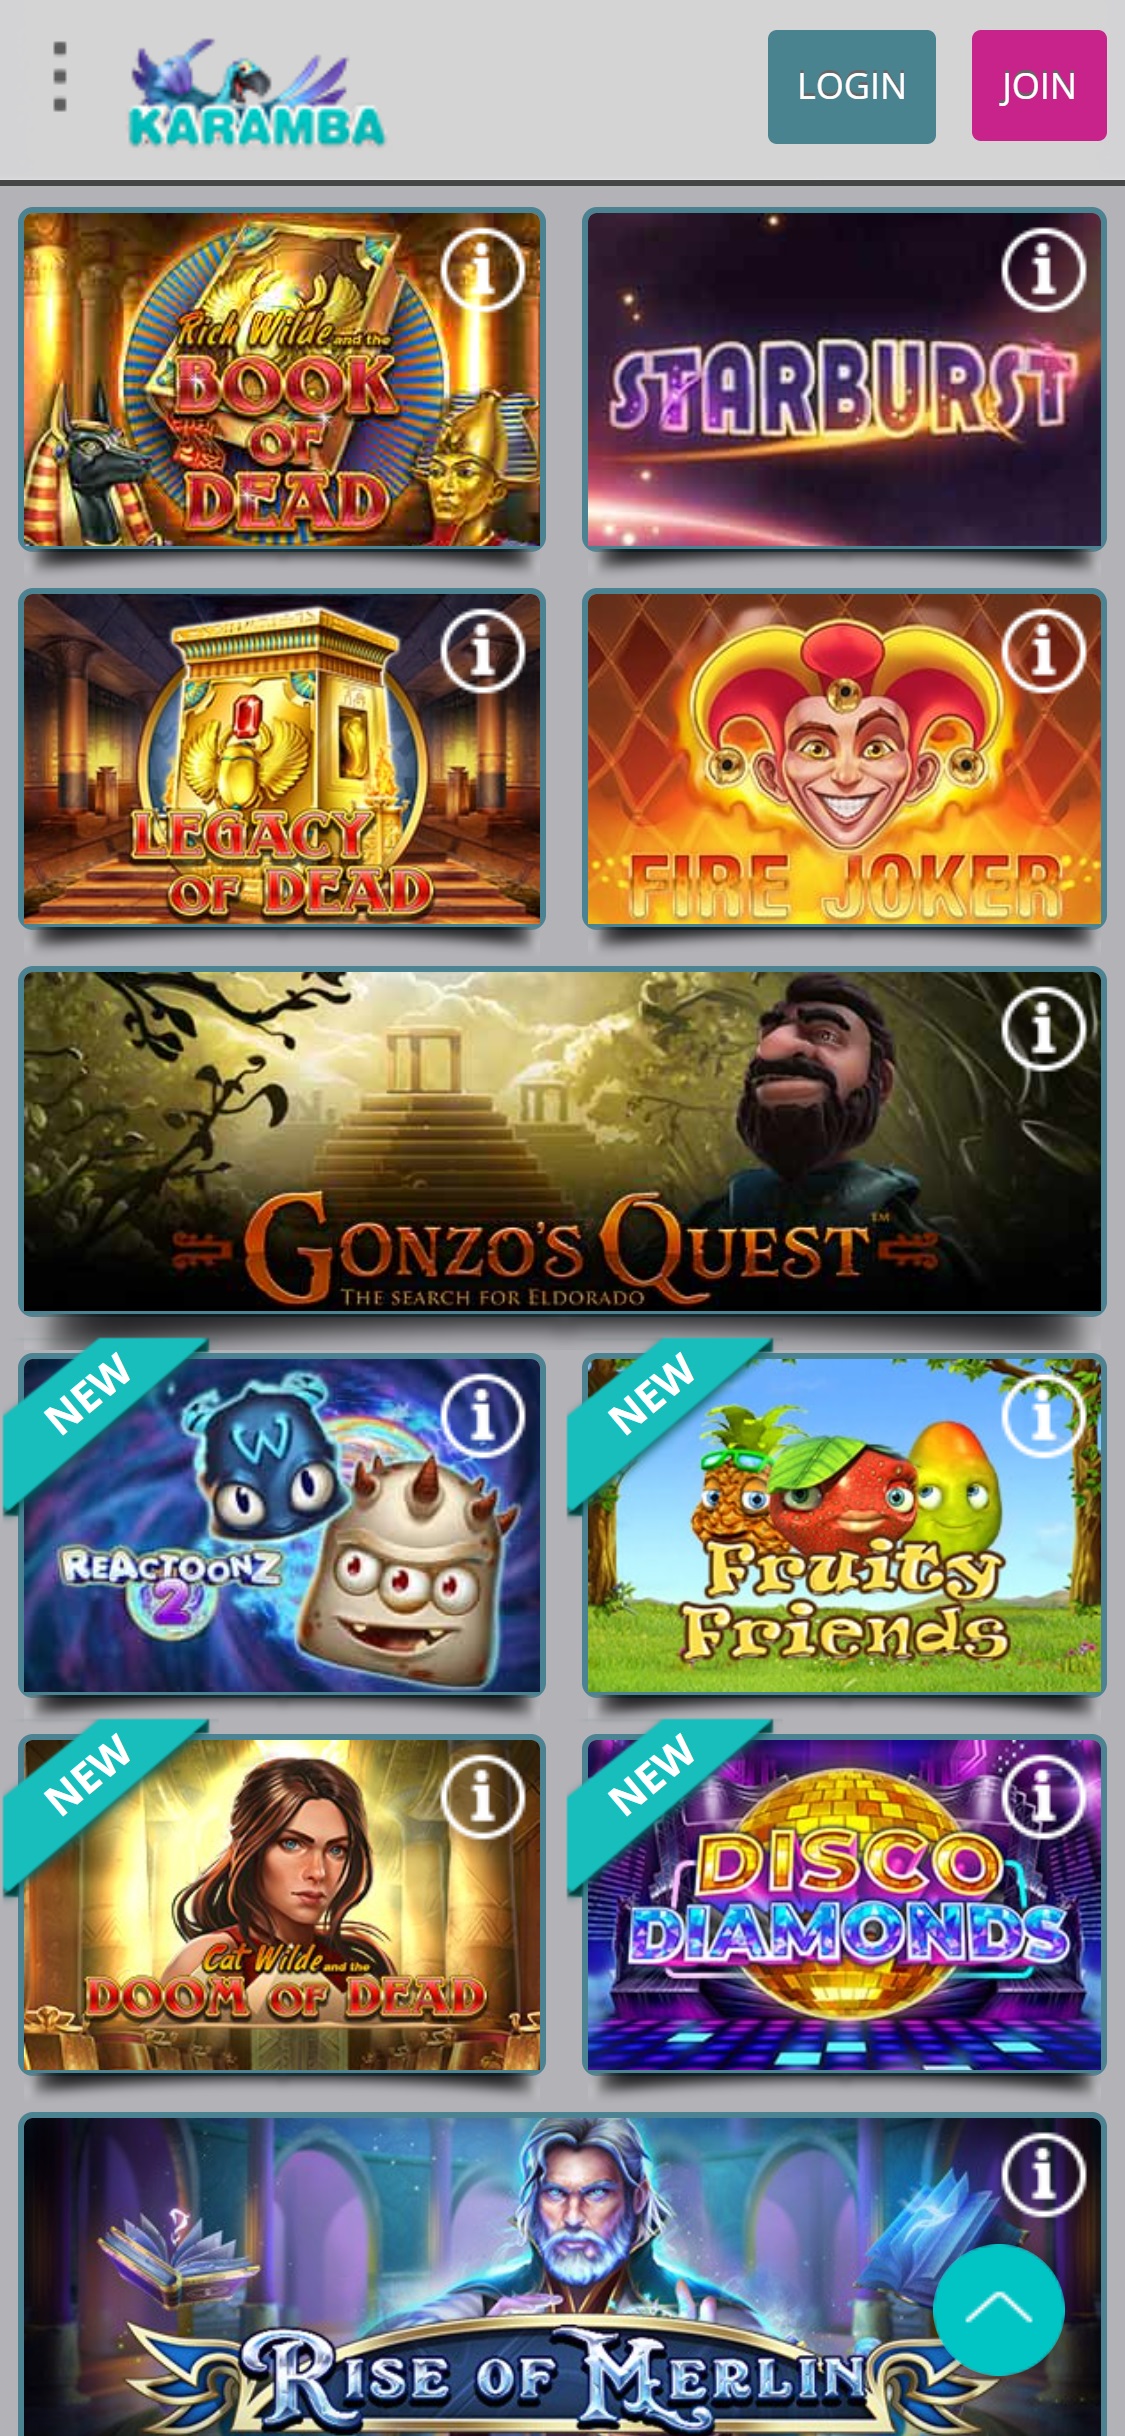 Karamba Casino Mobile Games Review